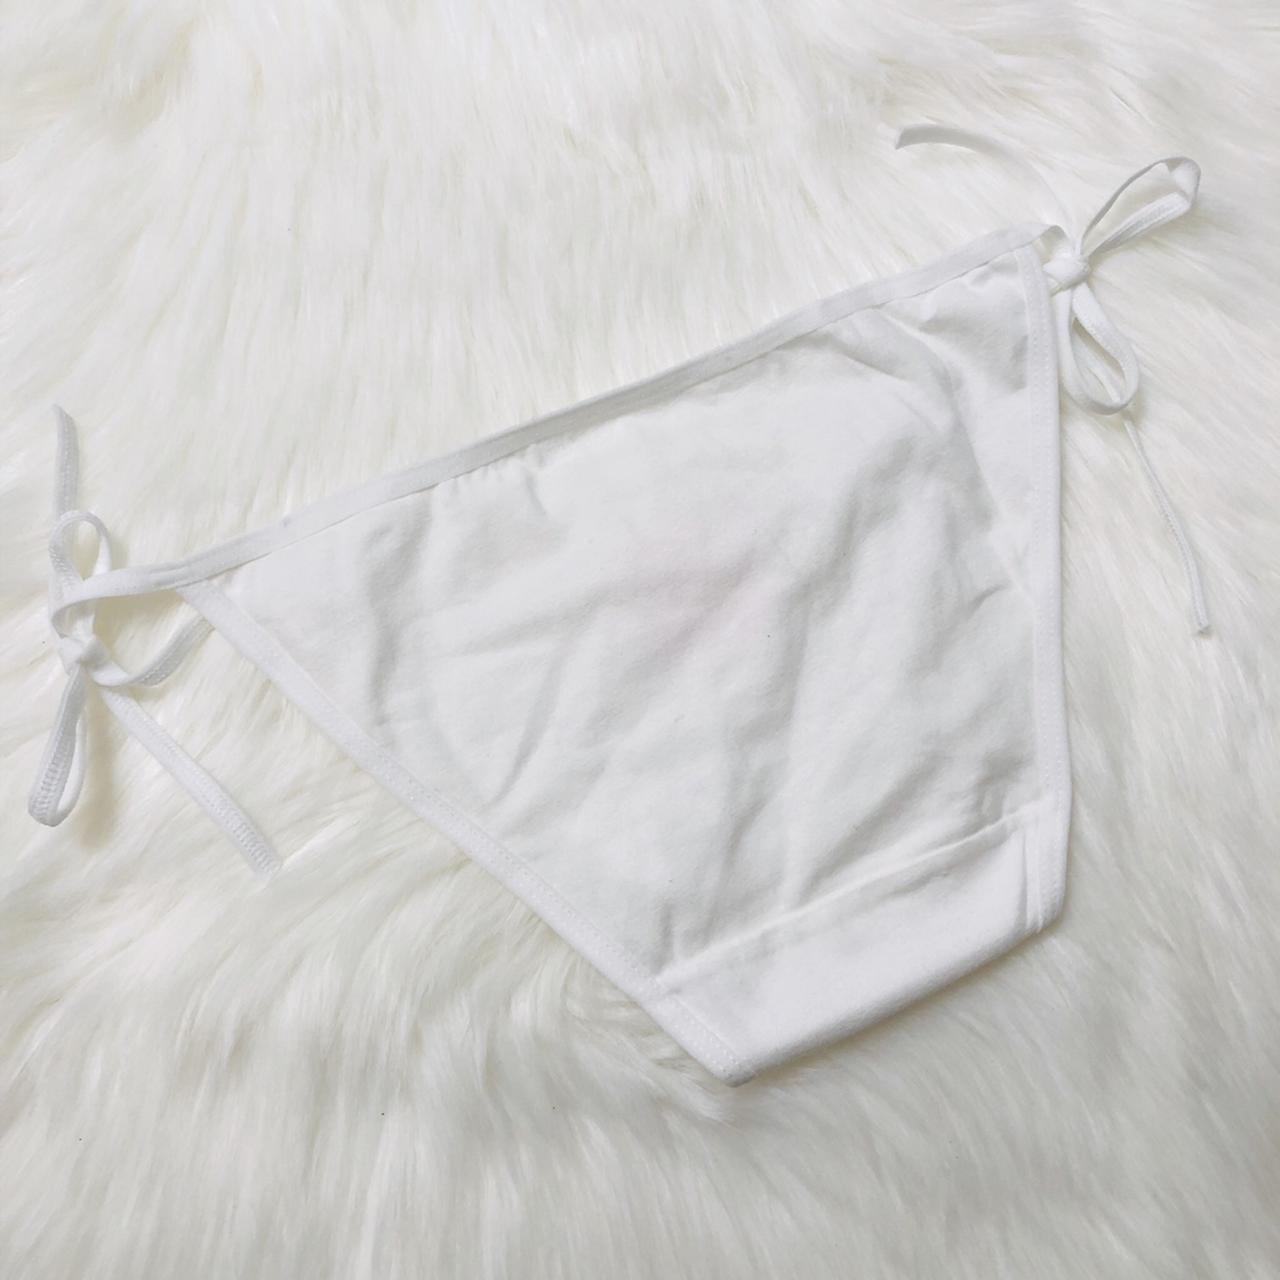 Forever 21 panties white cotton - Depop